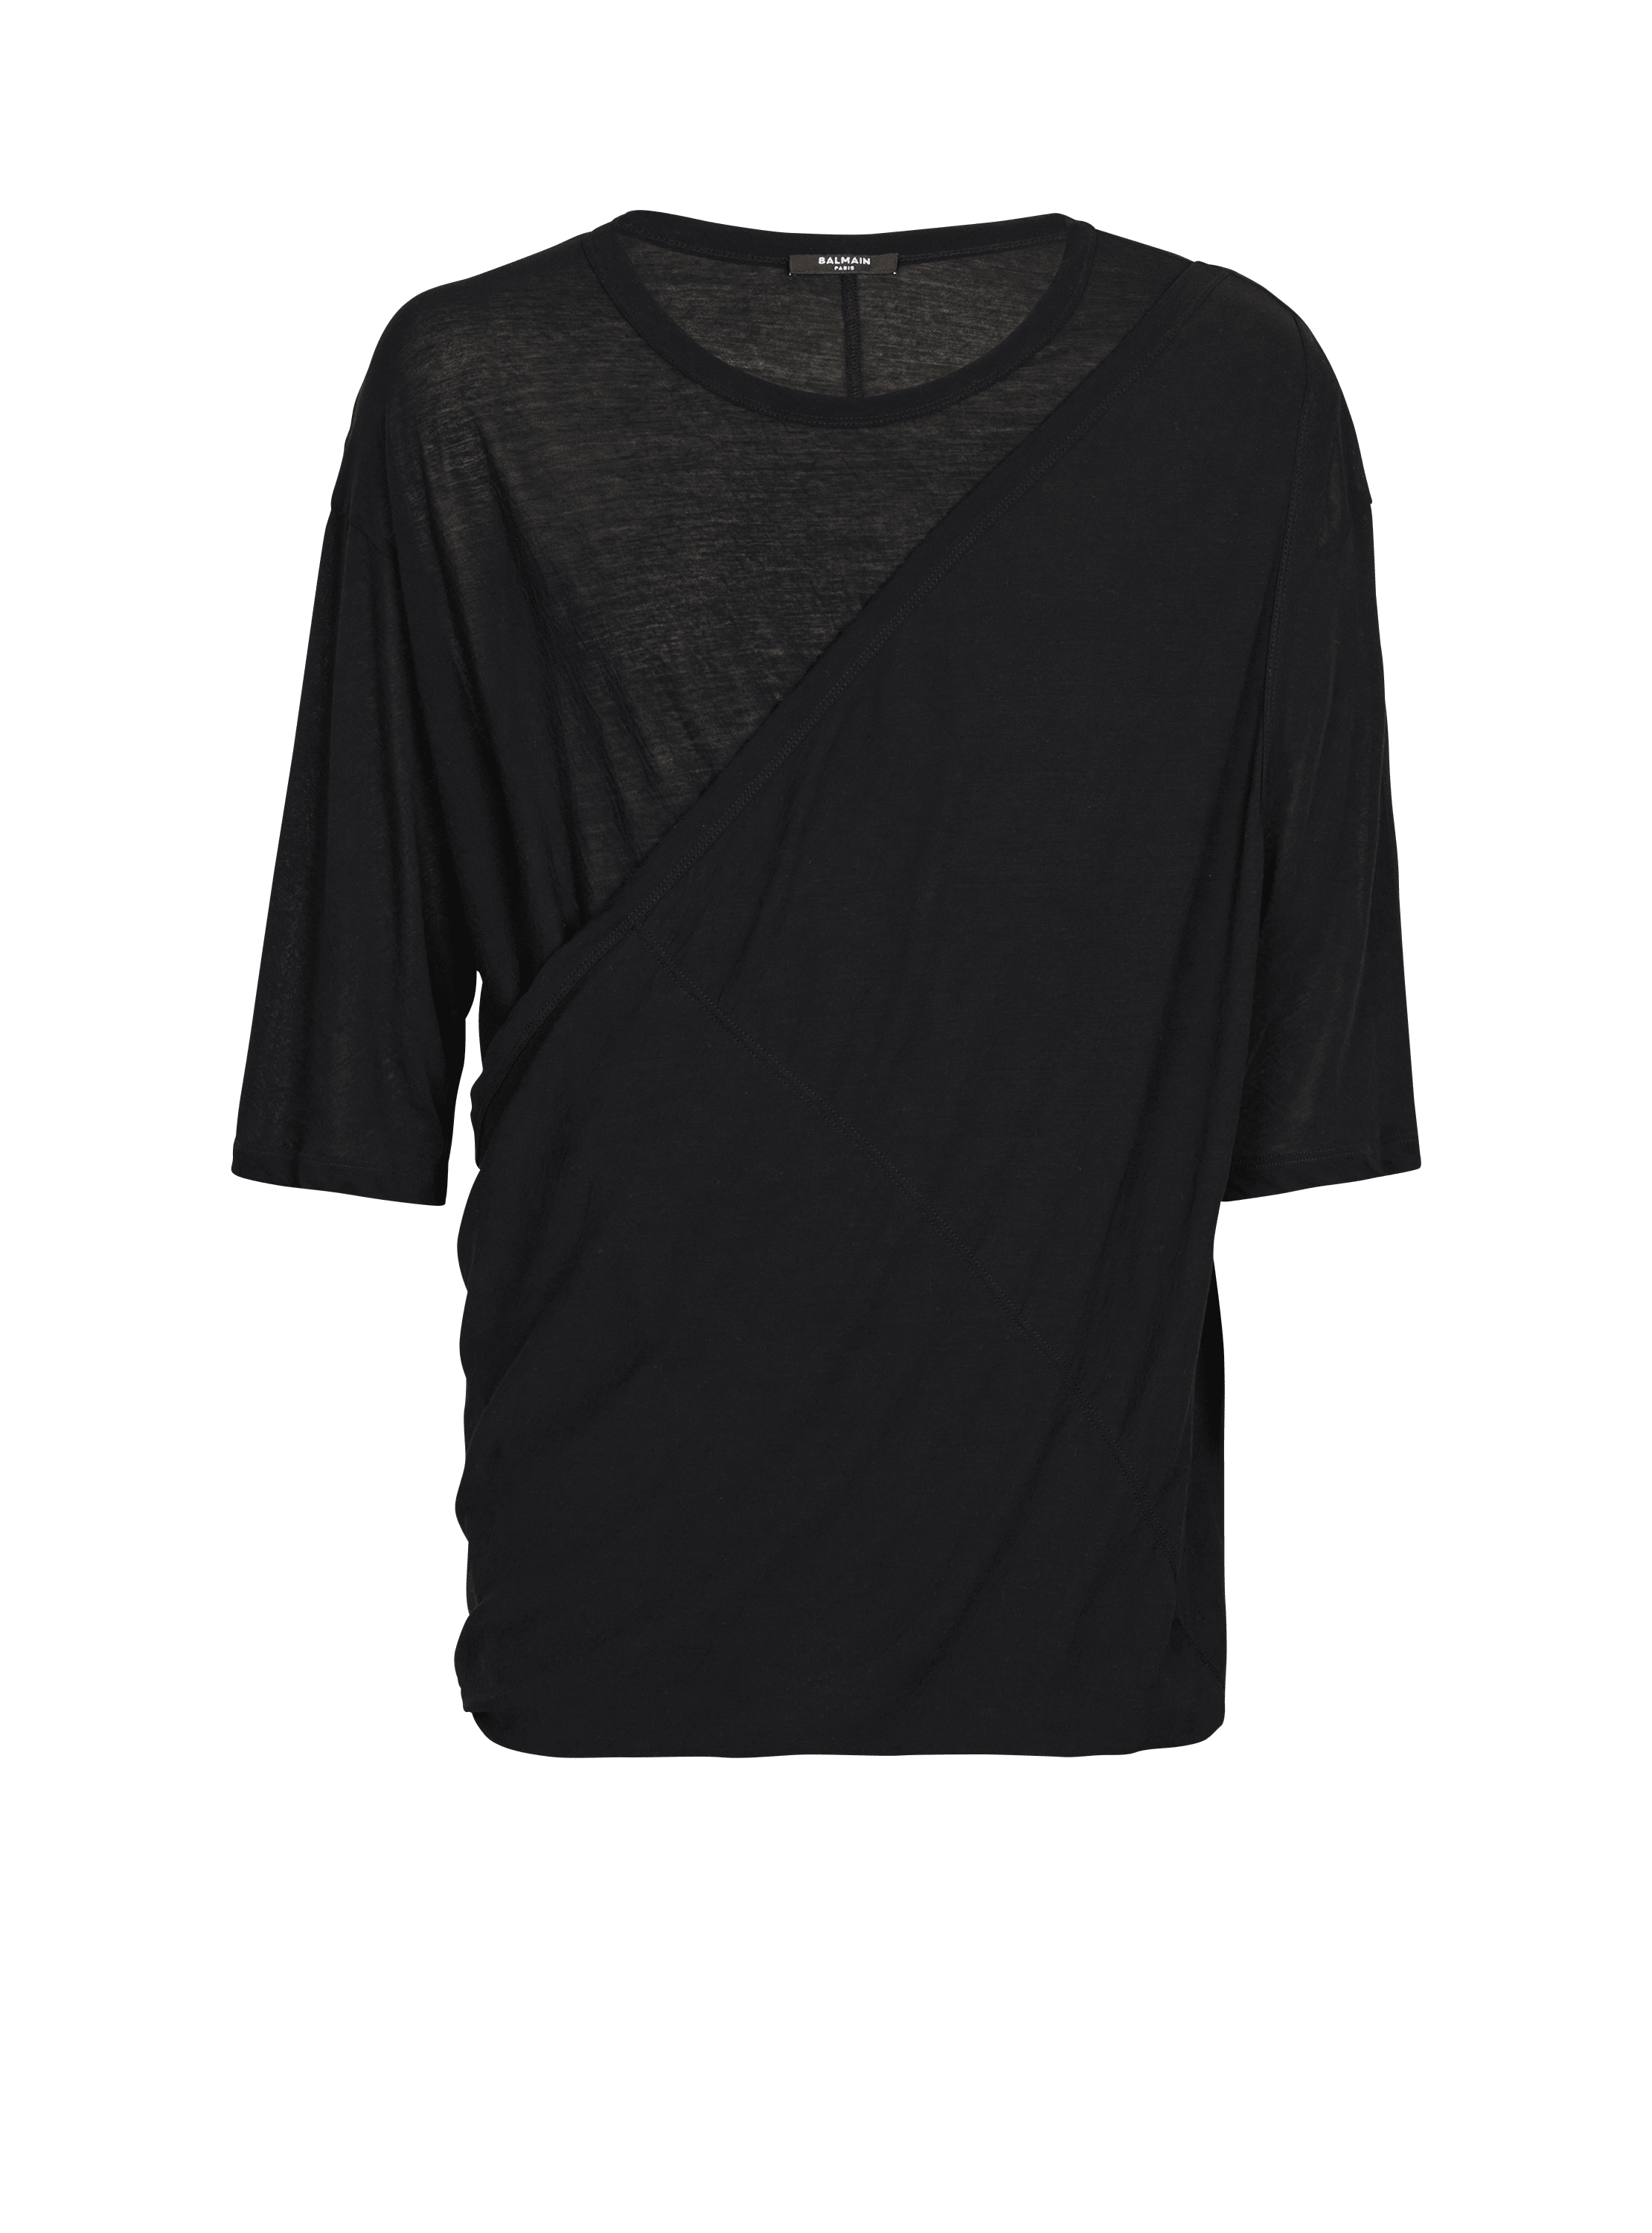 Draped jersey T-shirt, black, hi-res